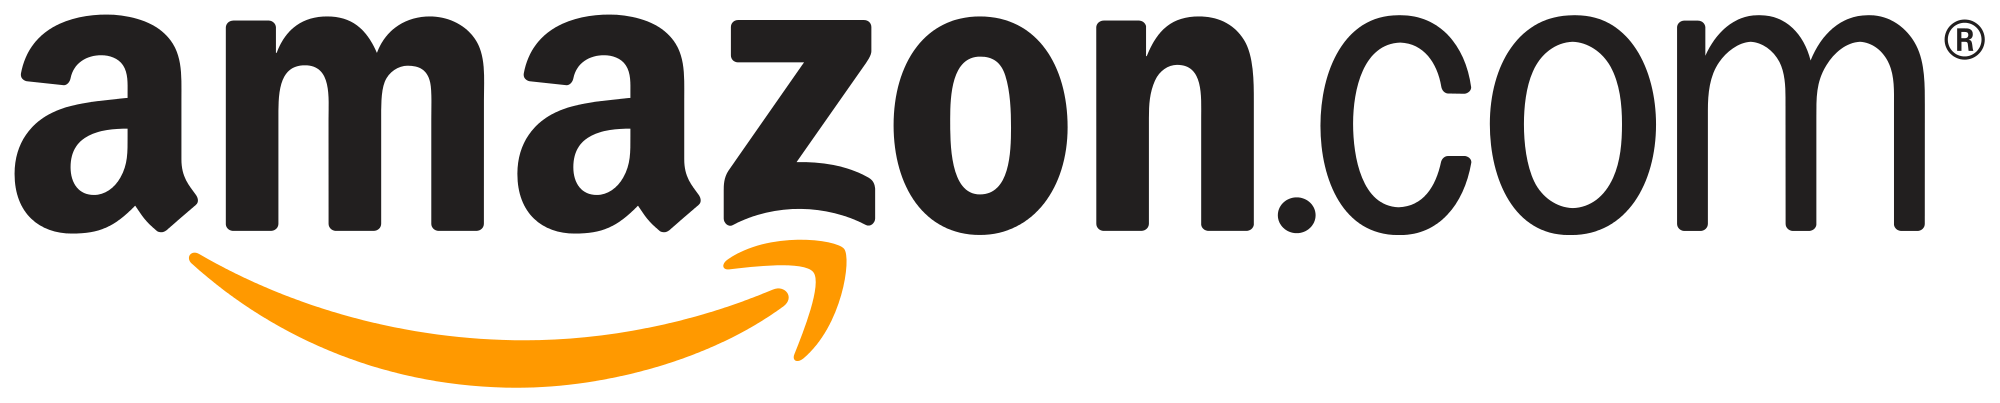 Amazon.com Logo.svg